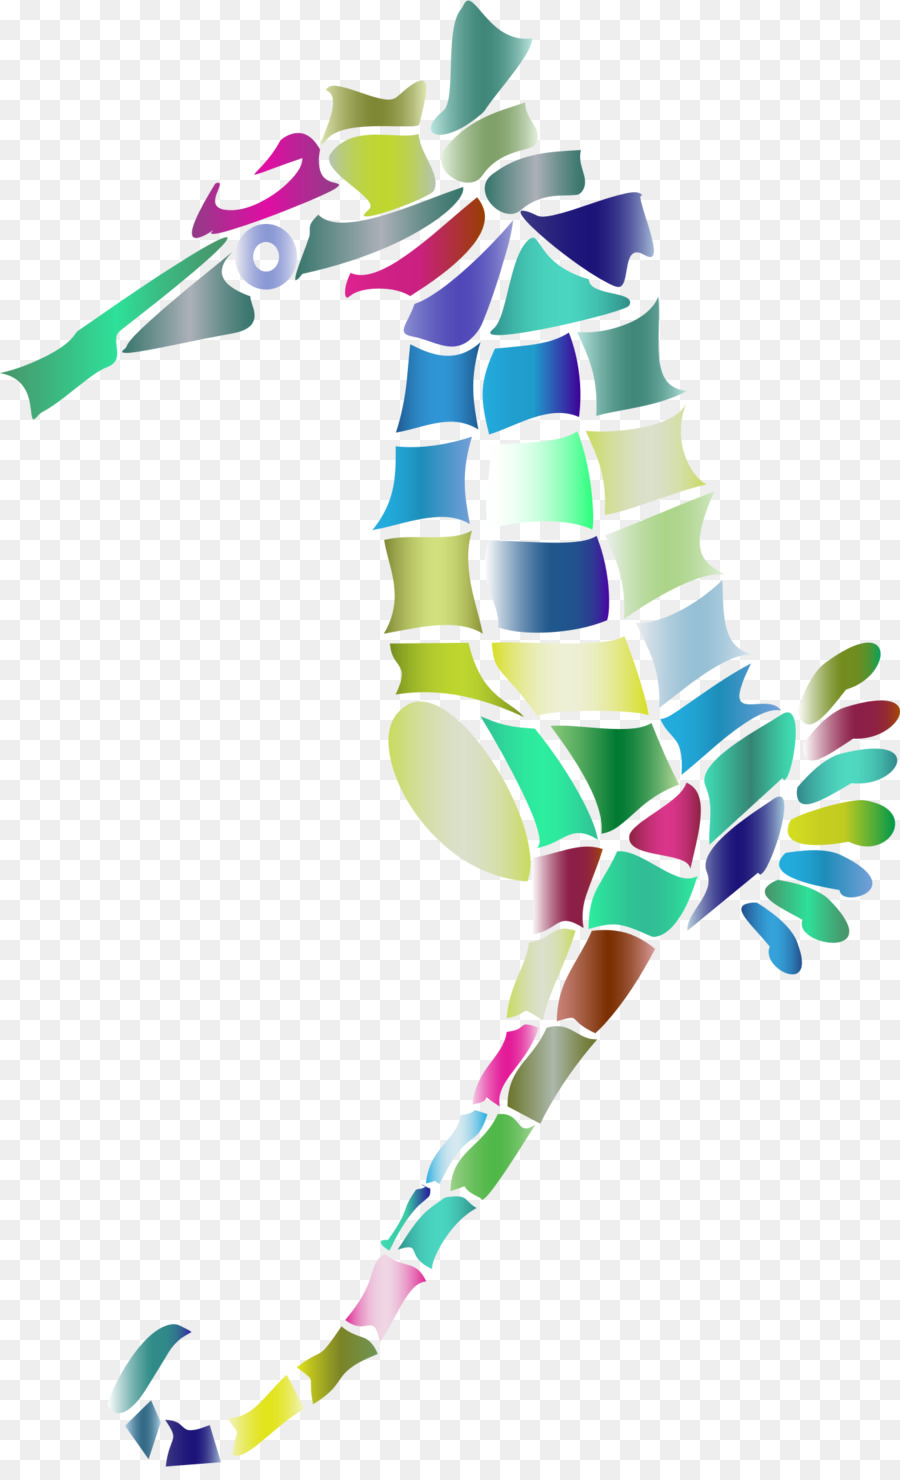 Seepferdchen Silhouette Clip art - Seahorse